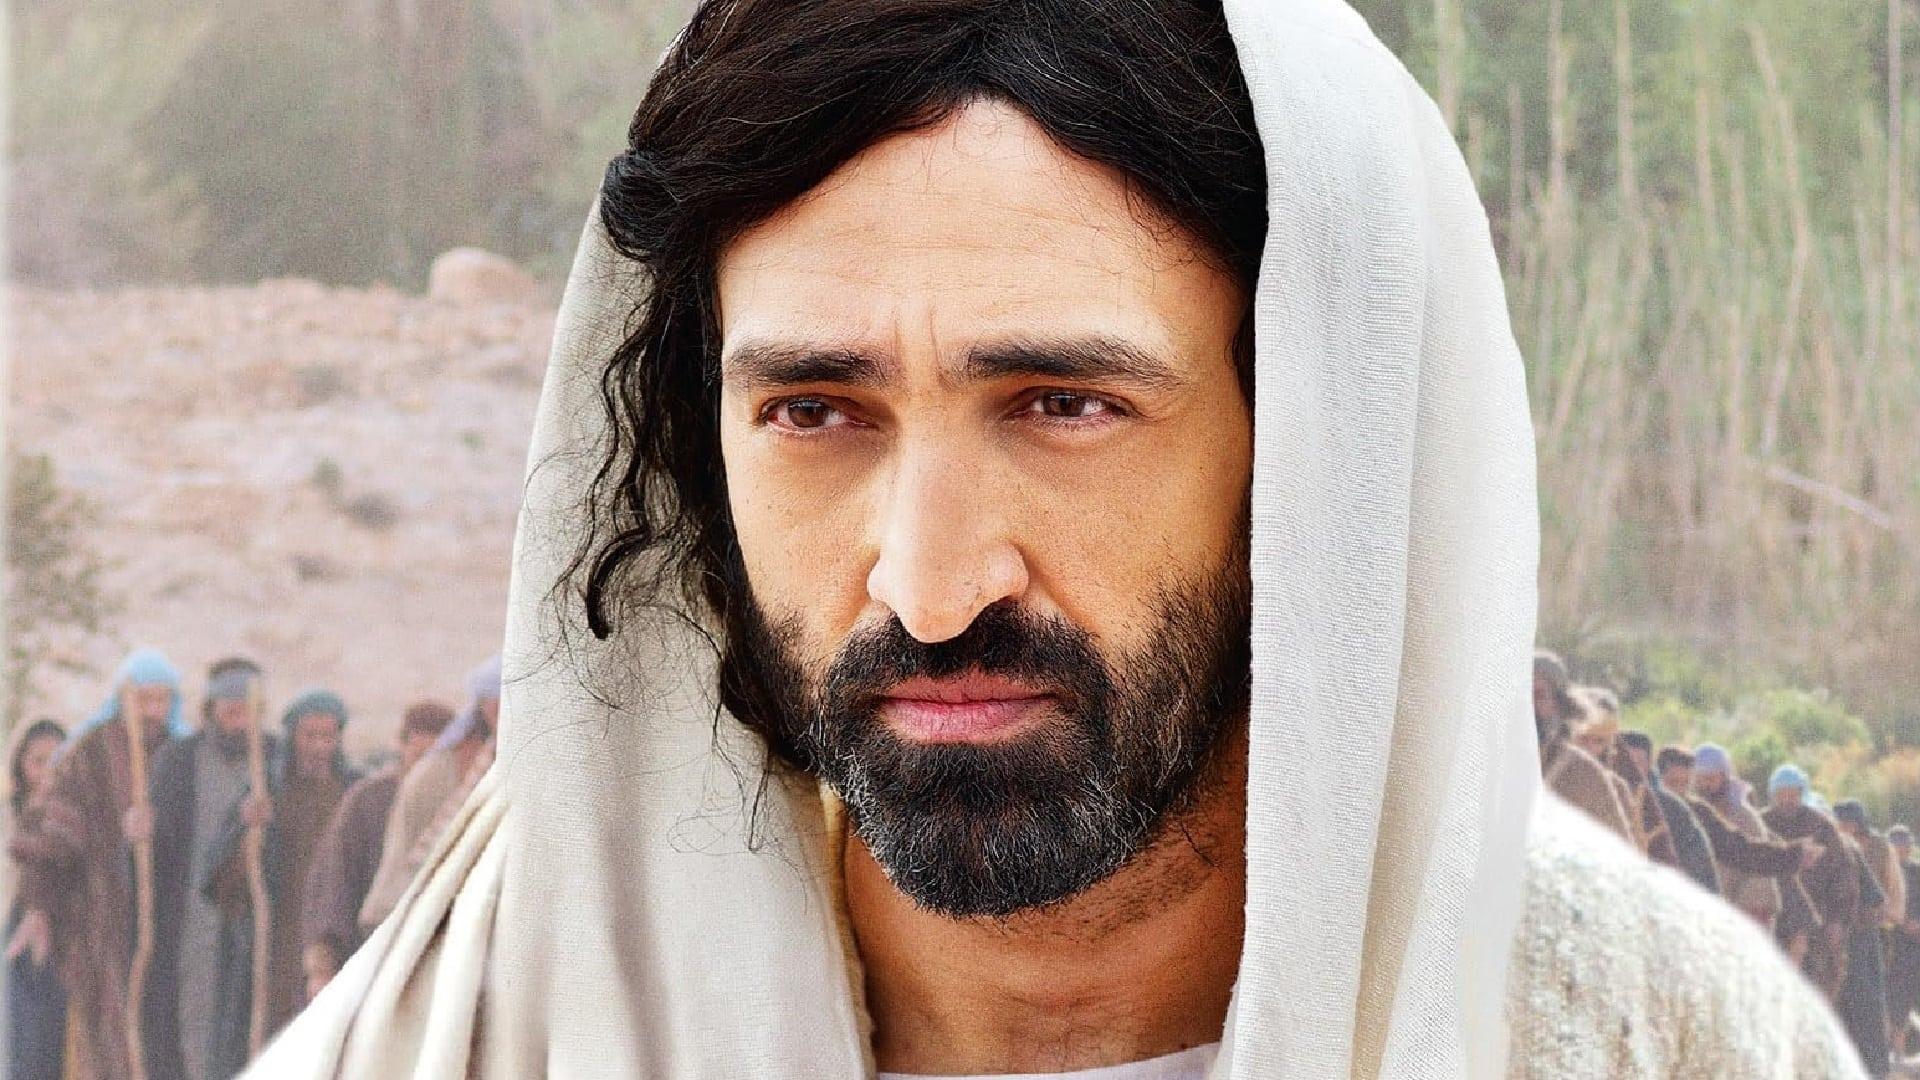 The Gospel of Luke backdrop